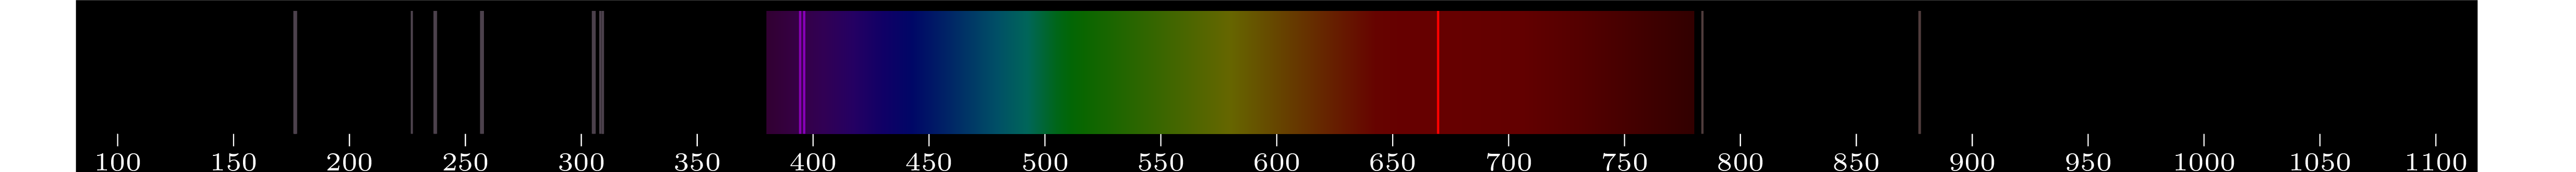 emmision spectra of element Al